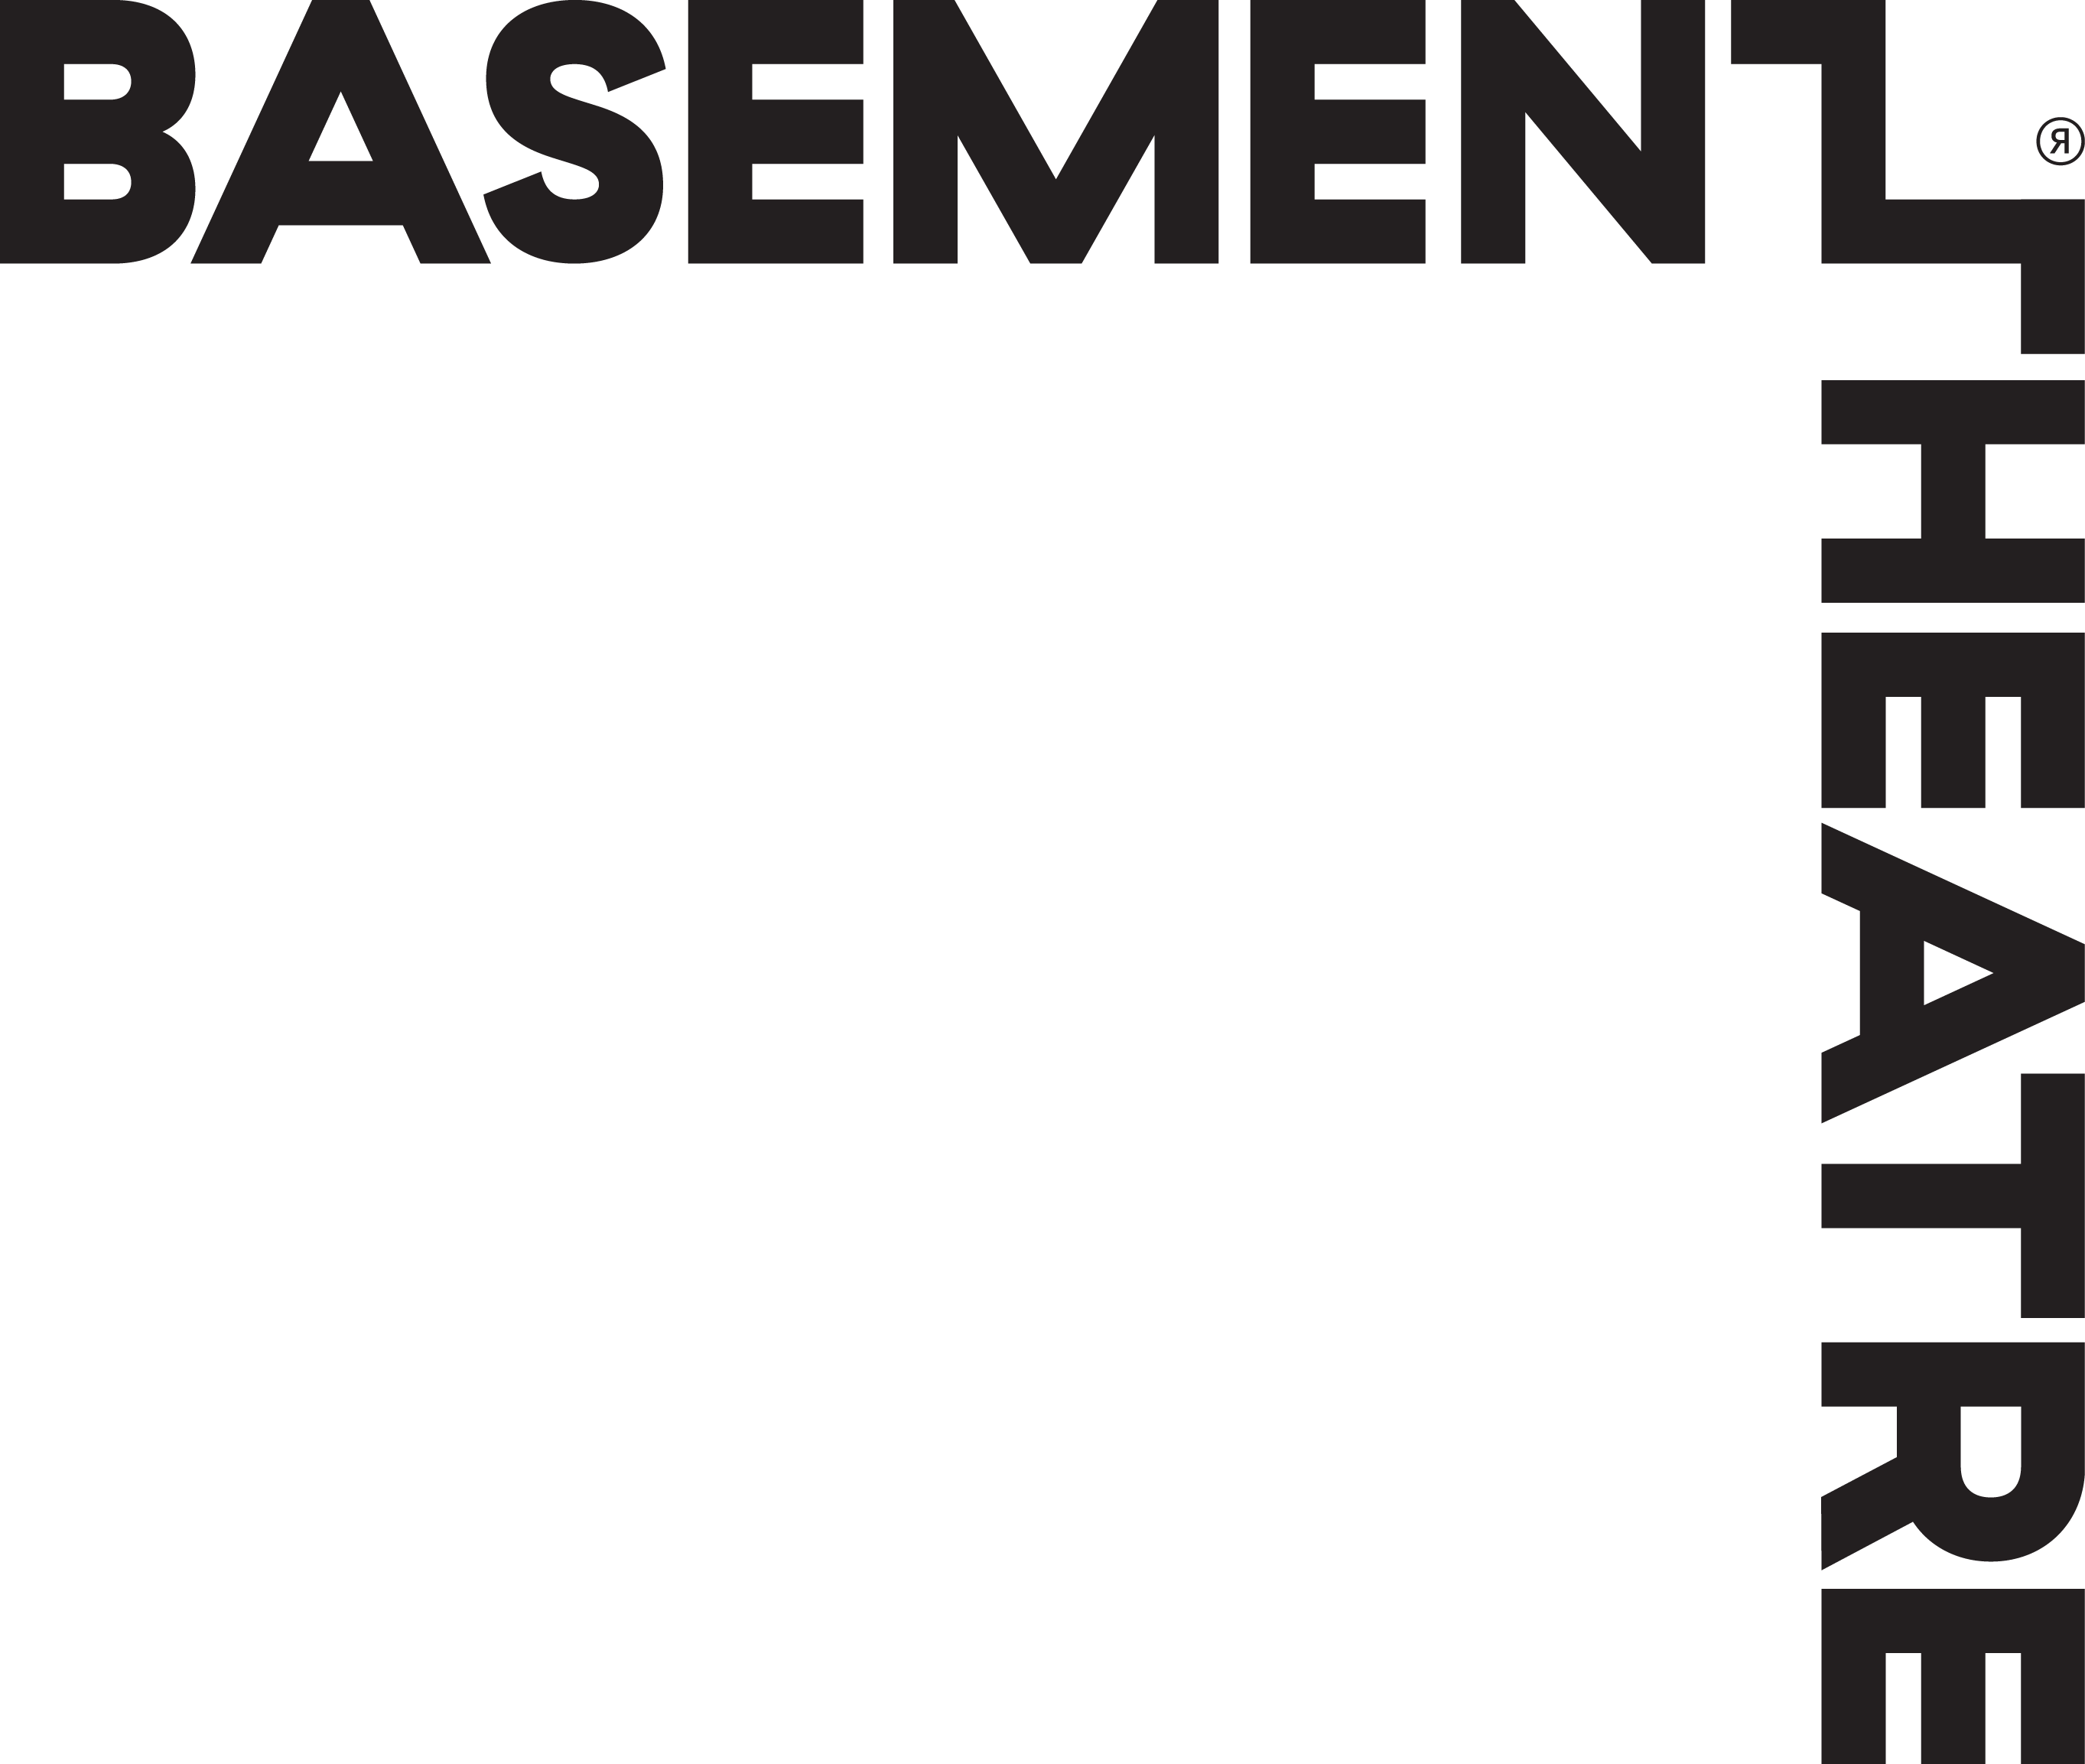 Basement Theatre